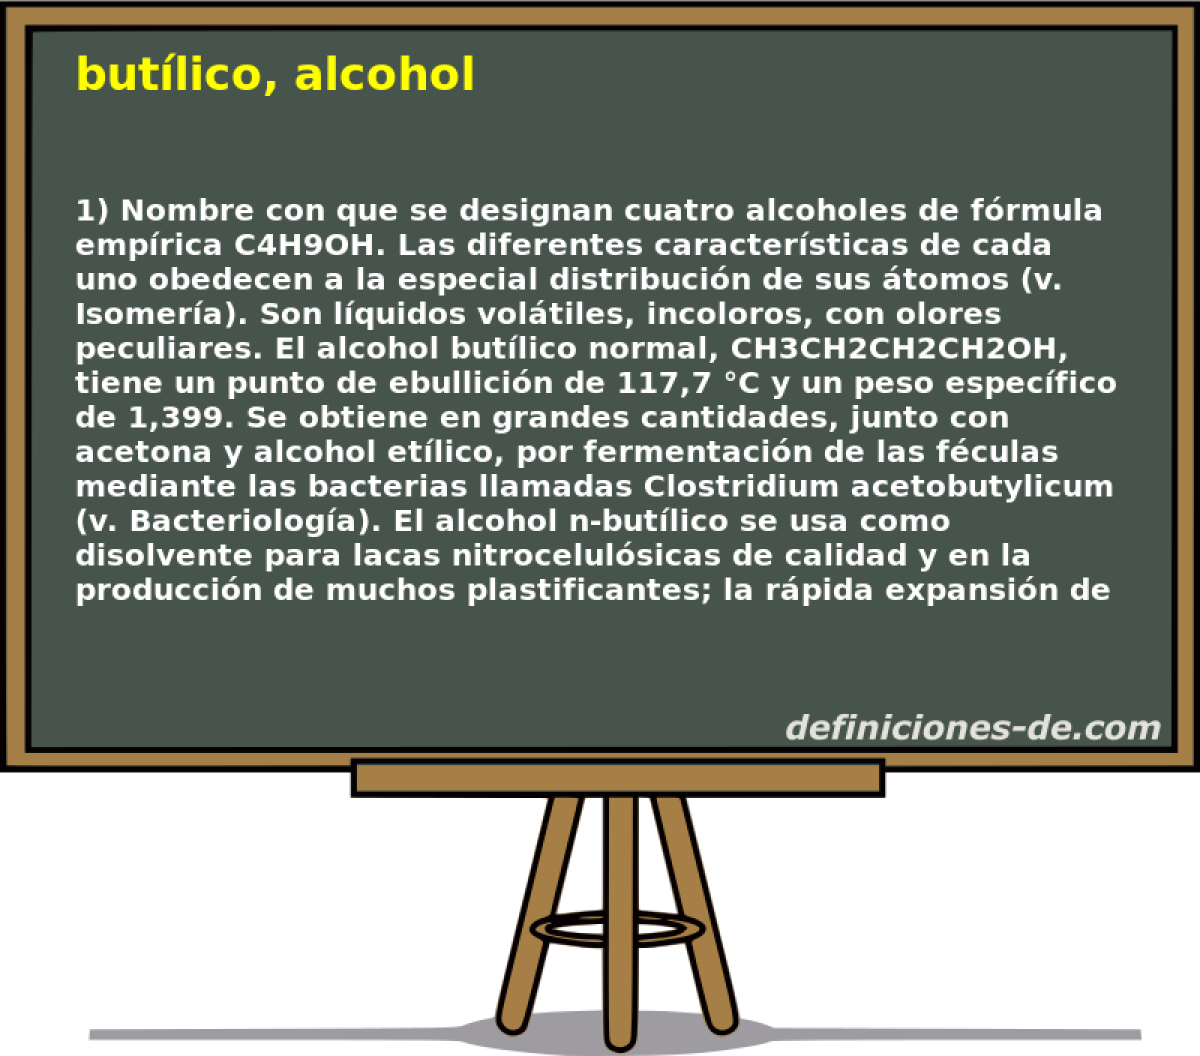 butlico, alcohol 